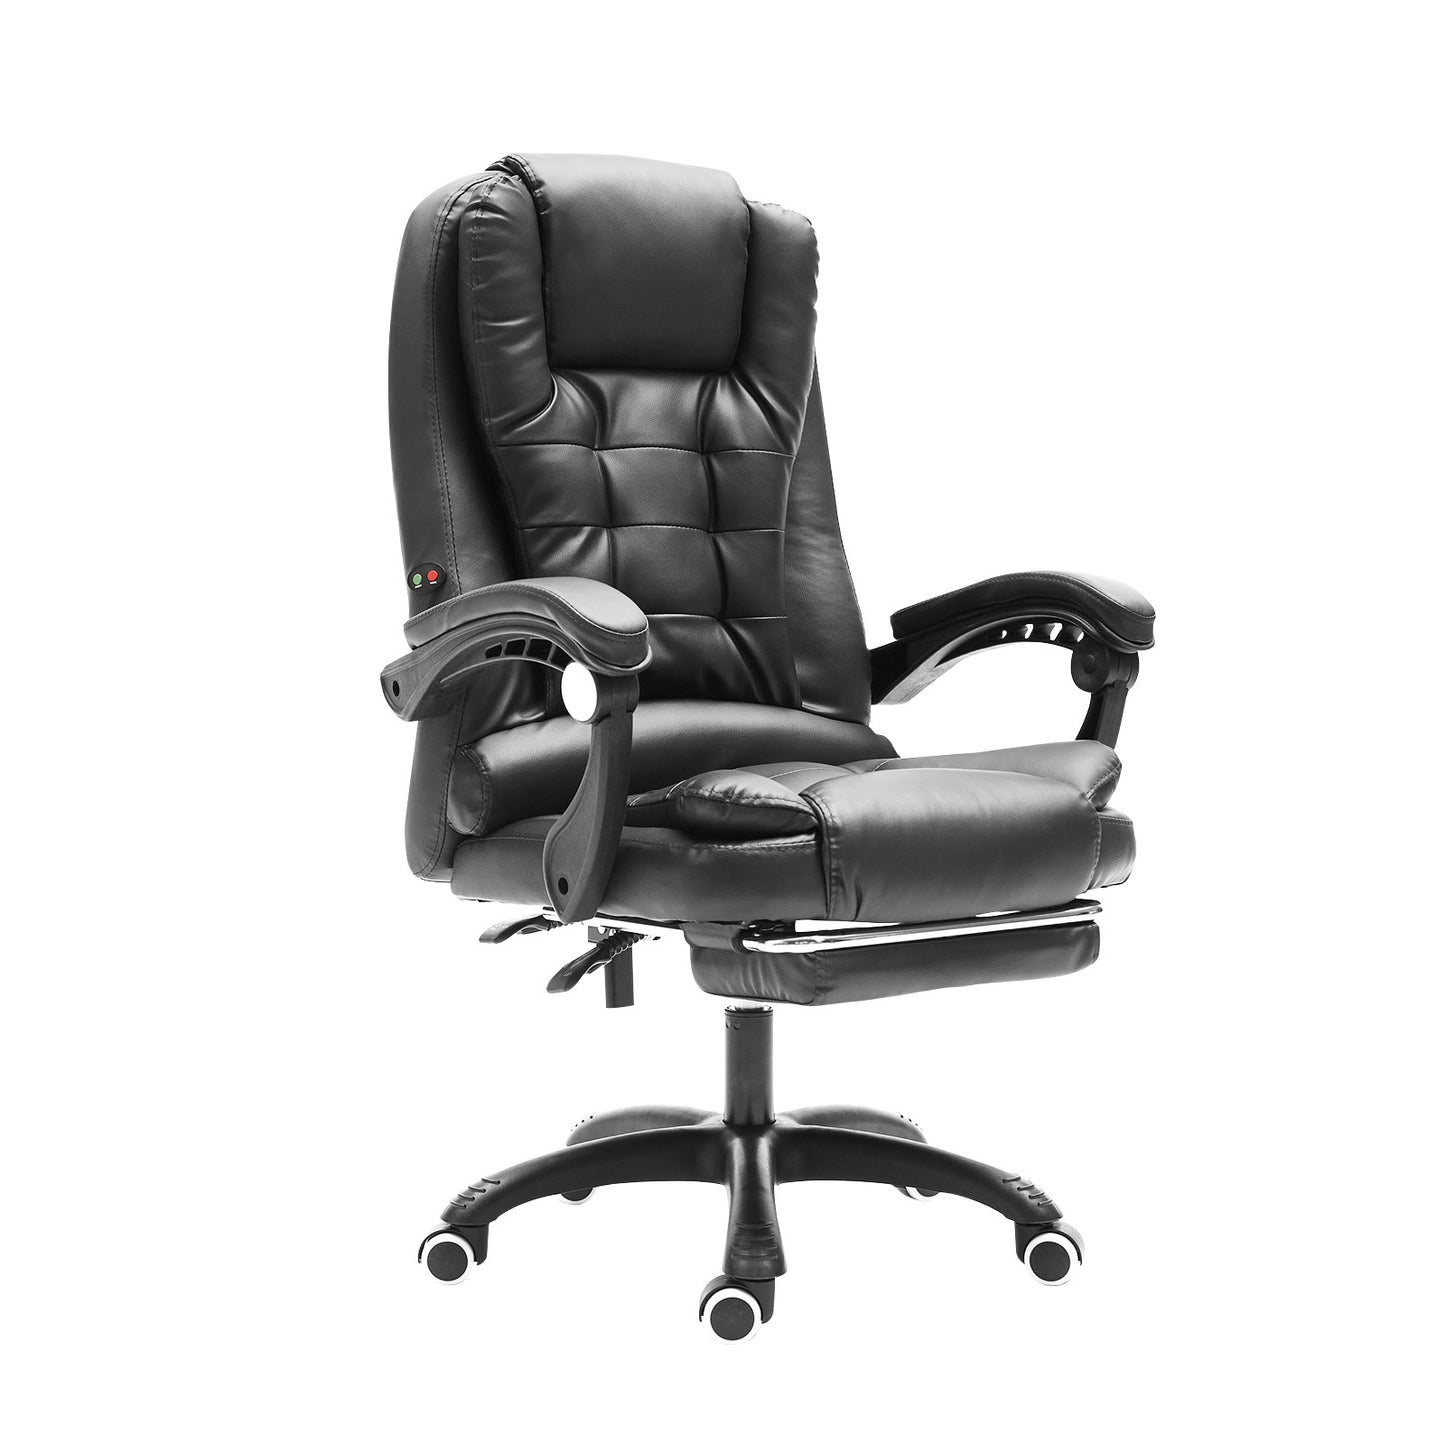 La Bella Massage Office Chair Footrest Ergonomic Executive Computer Work Gaming - Black